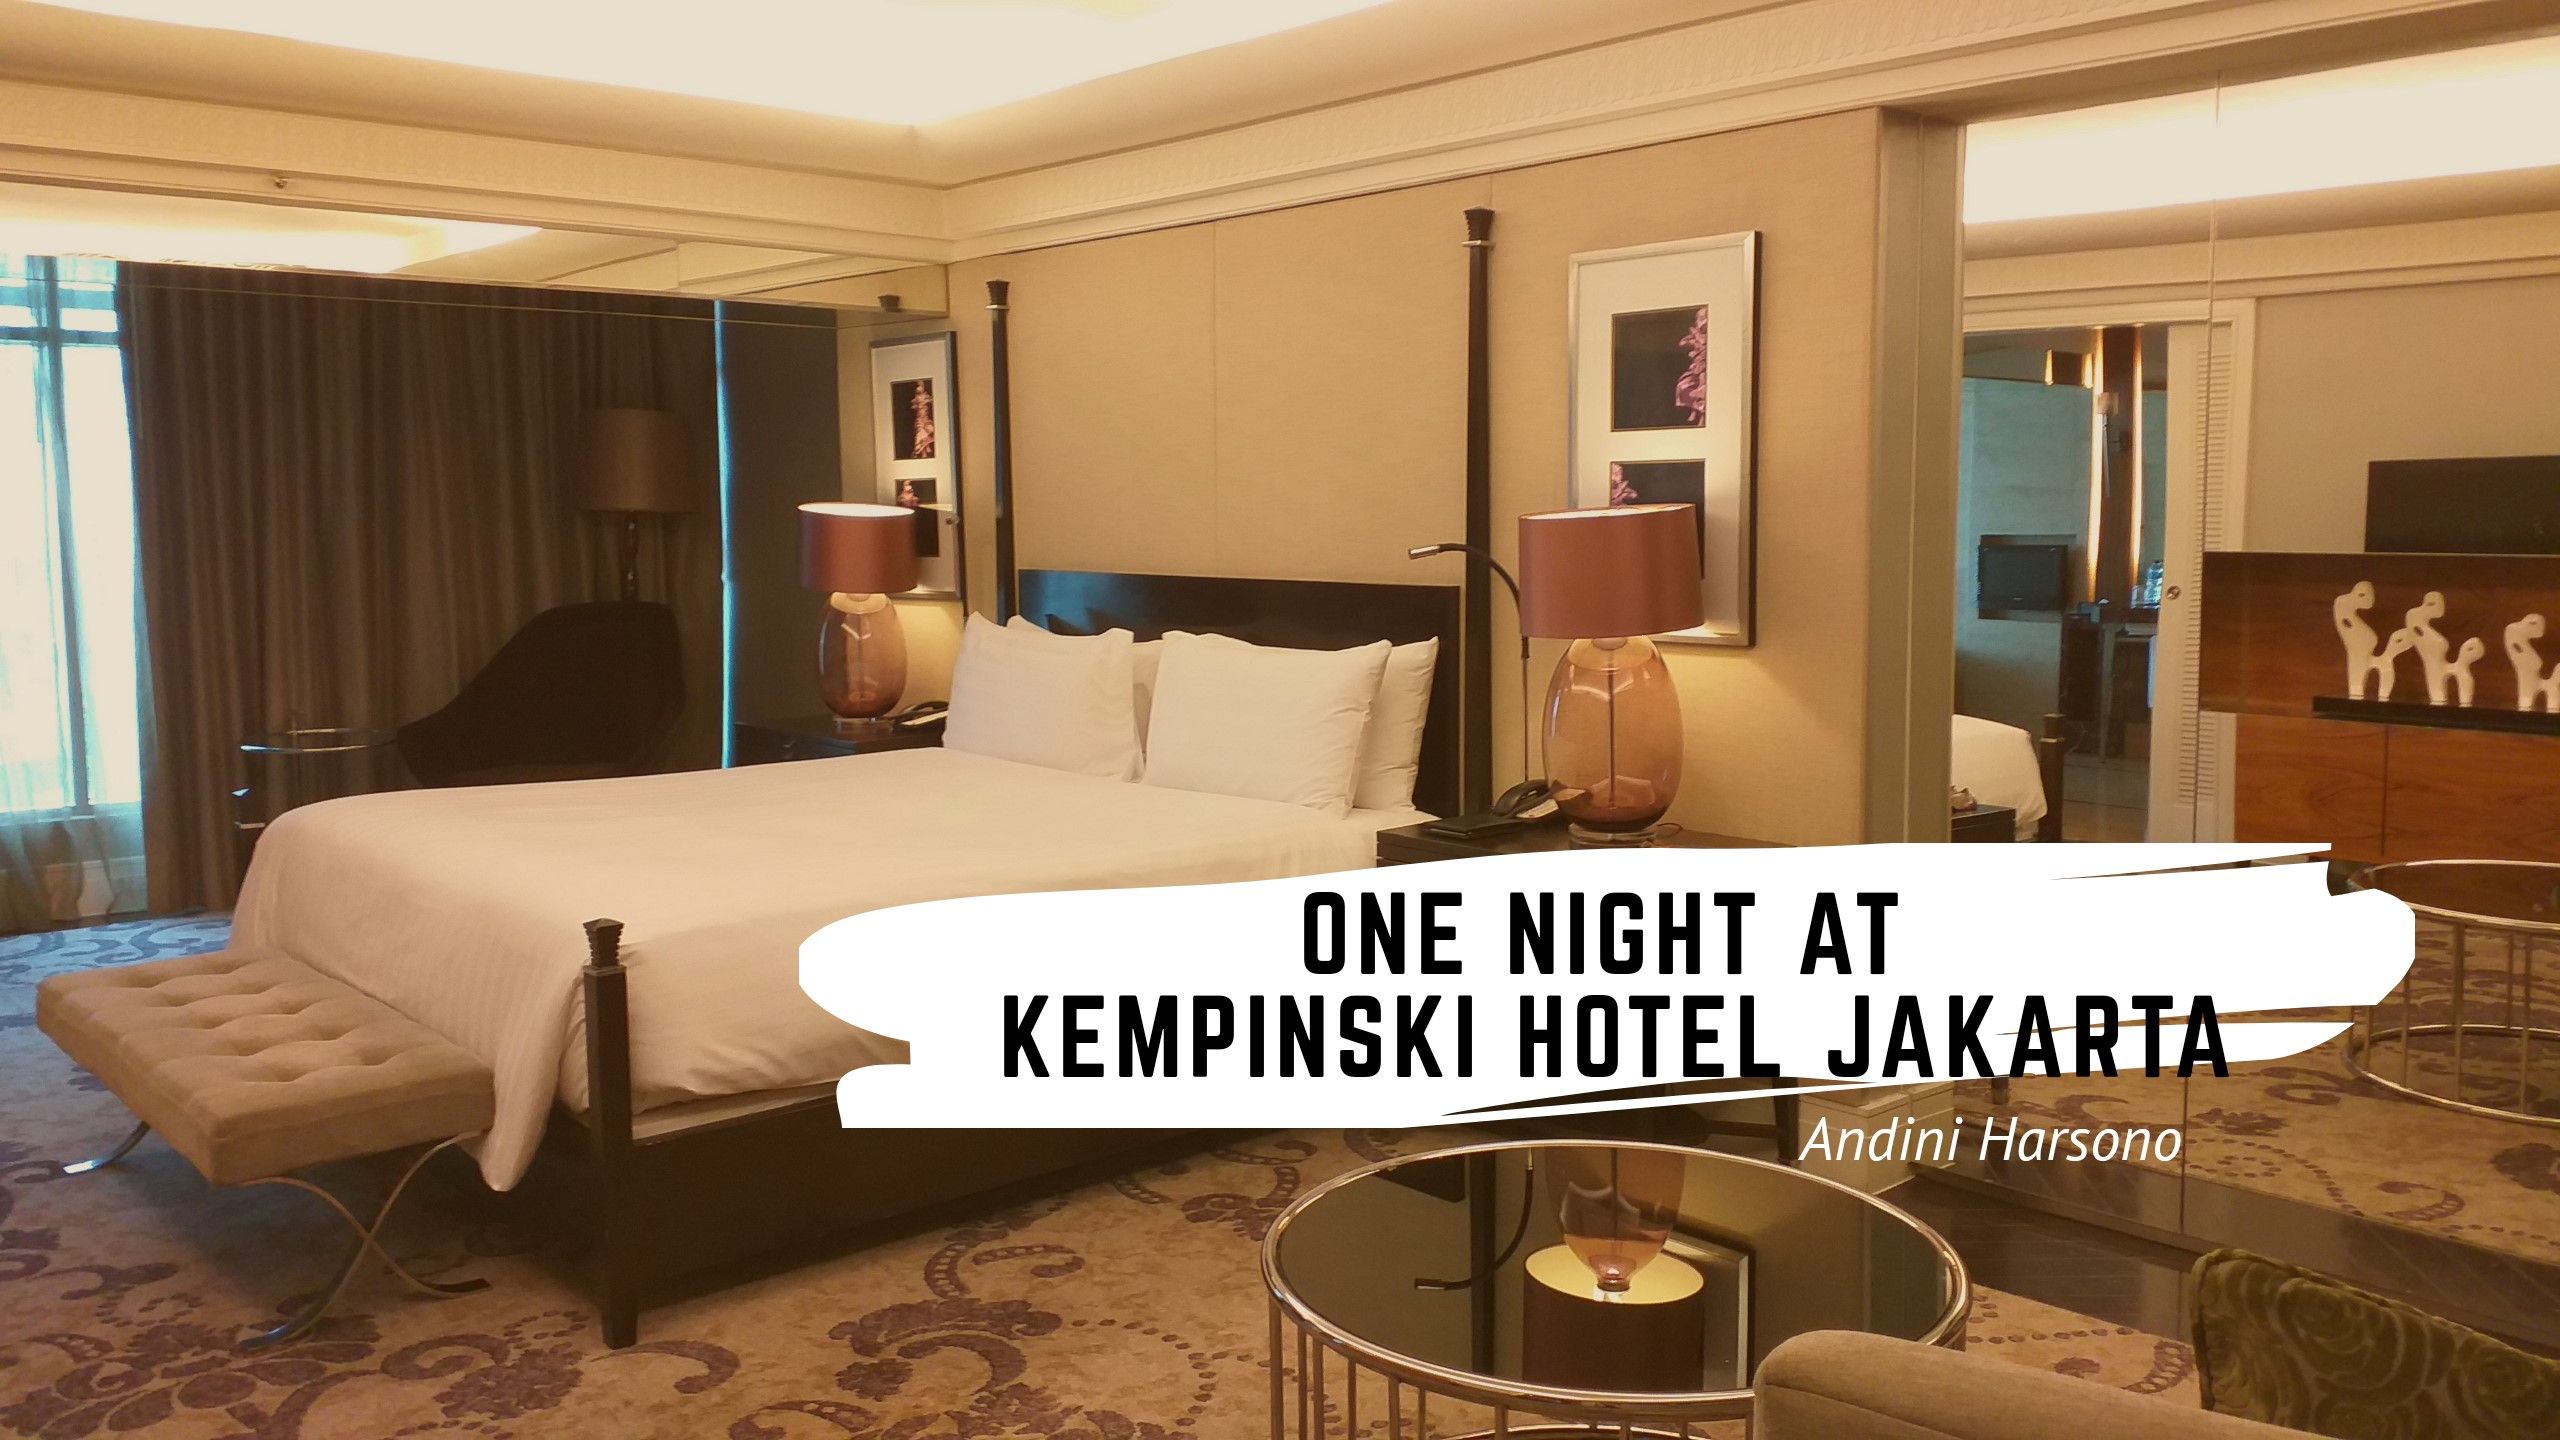 Jadi Sultan Semalam Menginap Di Hotel Indonesia Kempinski Halaman 1 Kompasiana Com